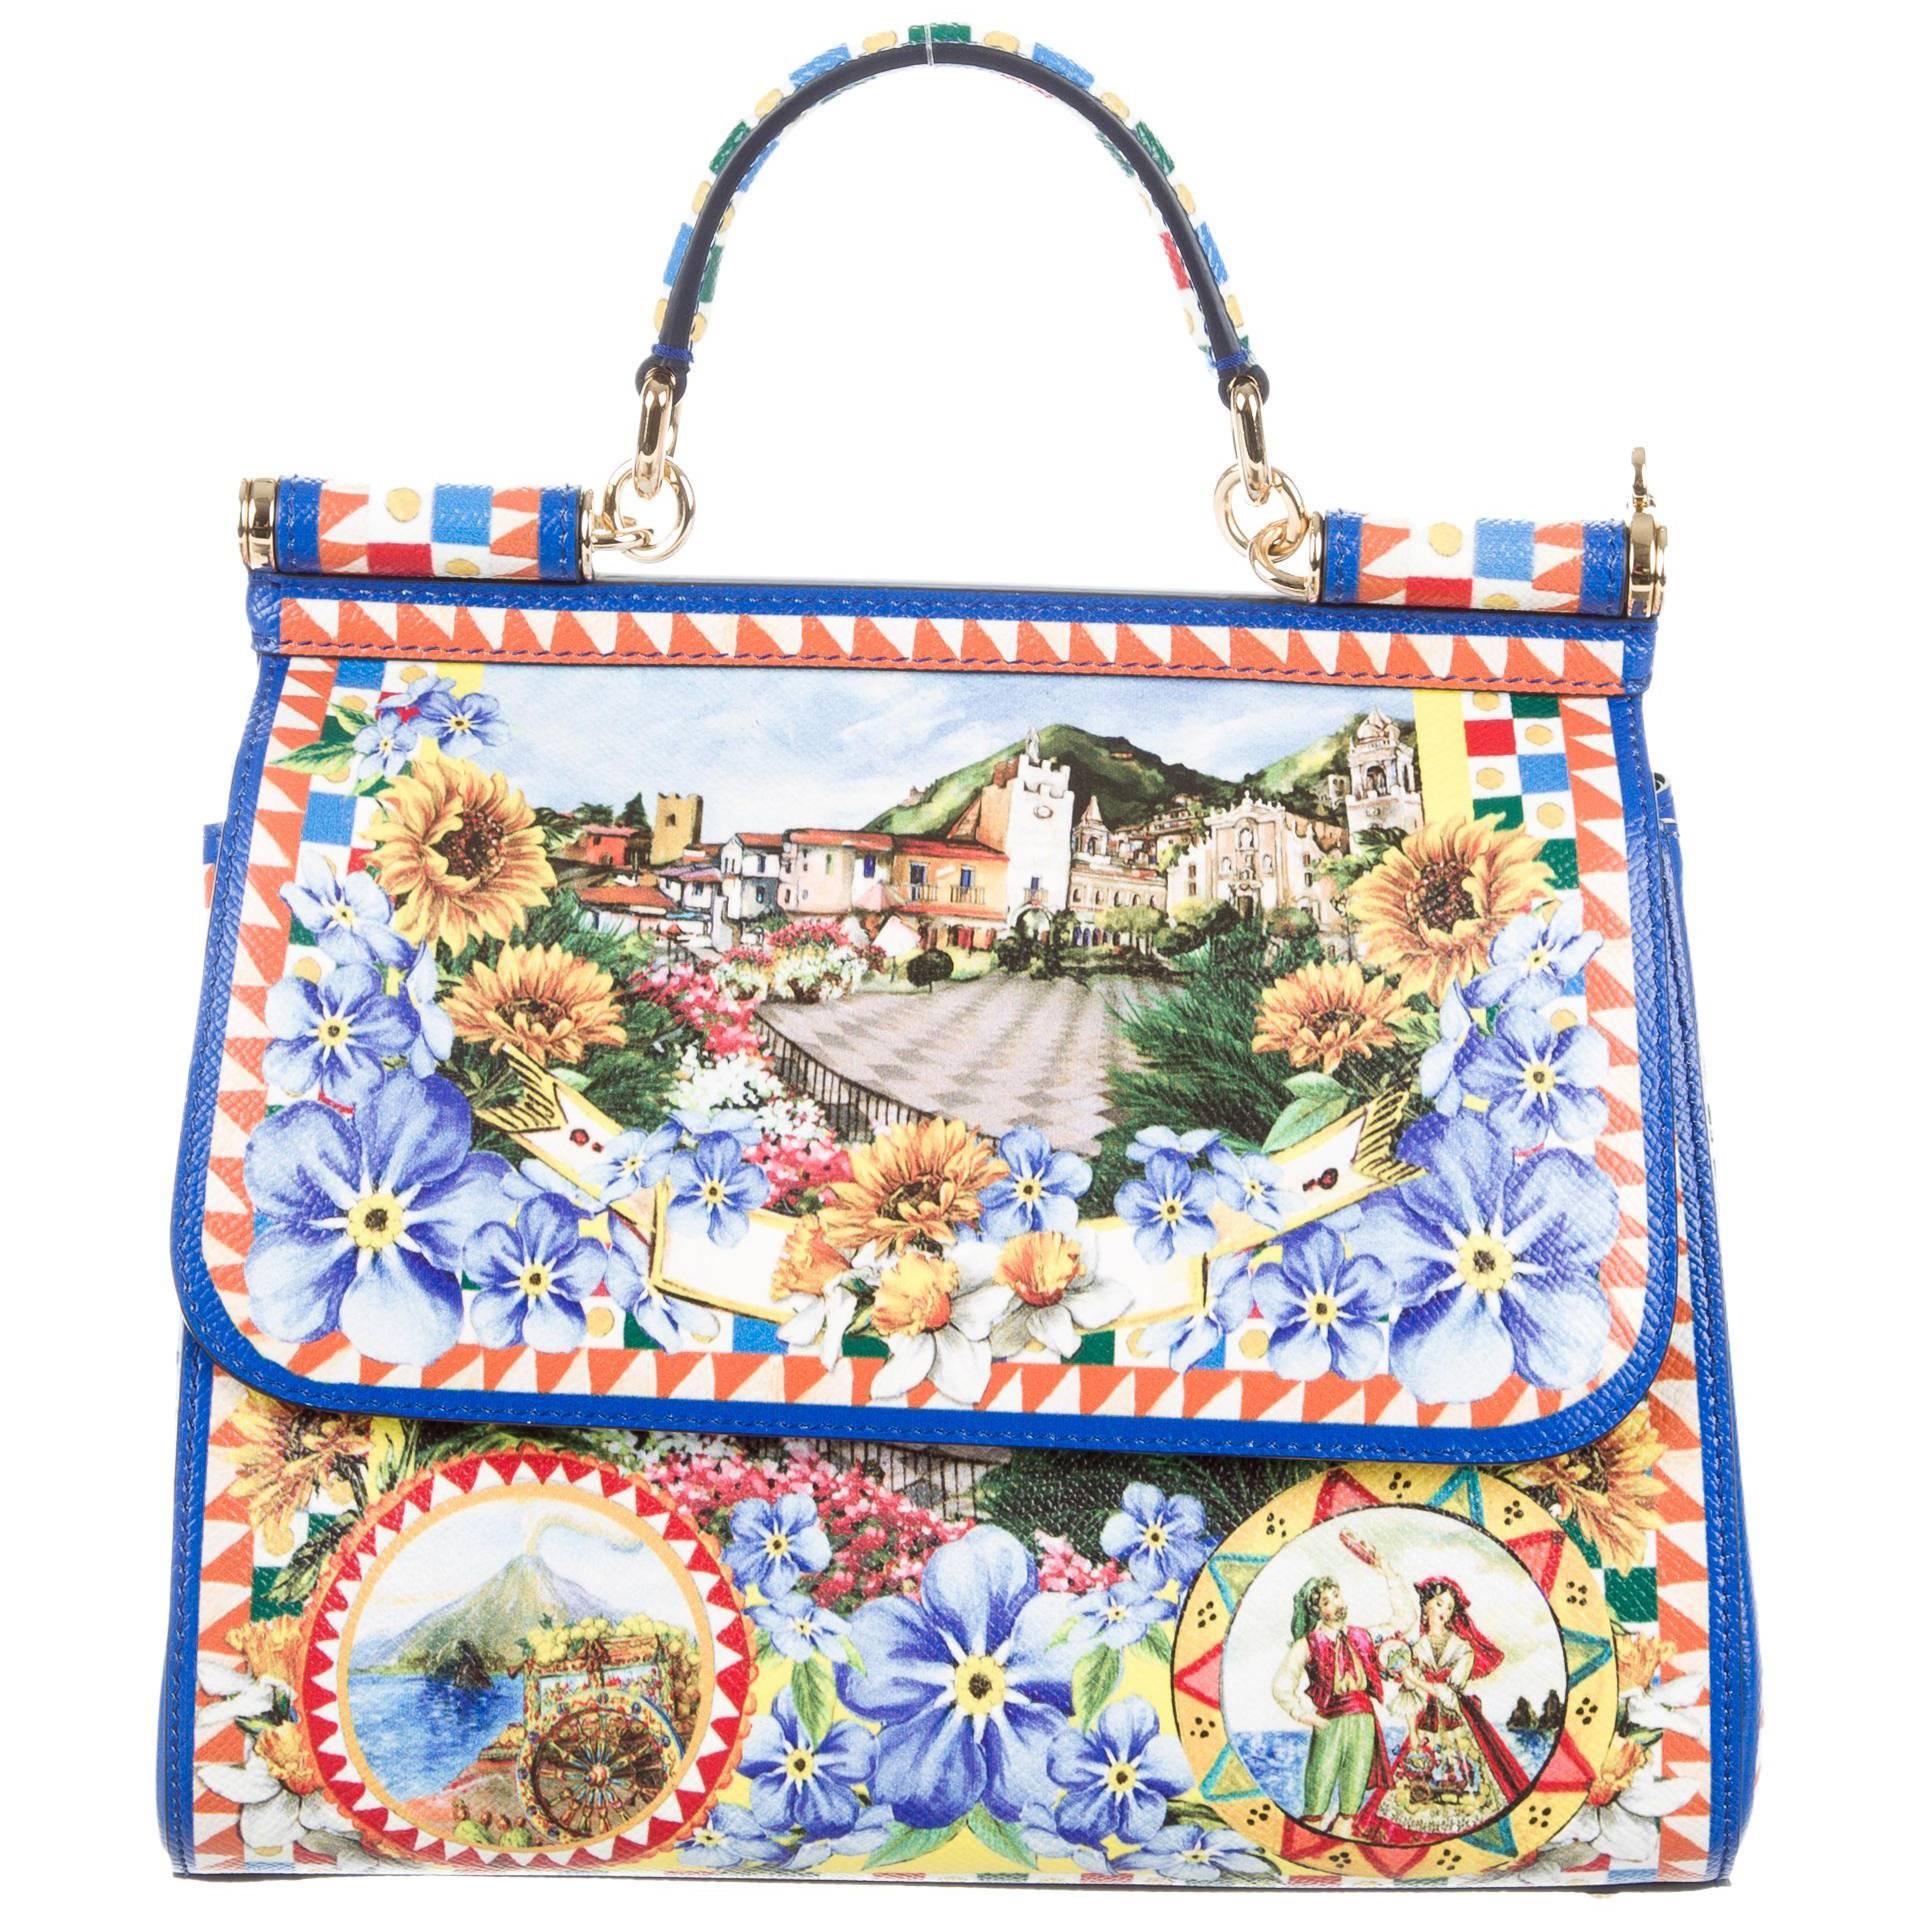 Dolce & Gabbana Runway Printed Kelly Style Top Handle Satchel Shoulder Bag